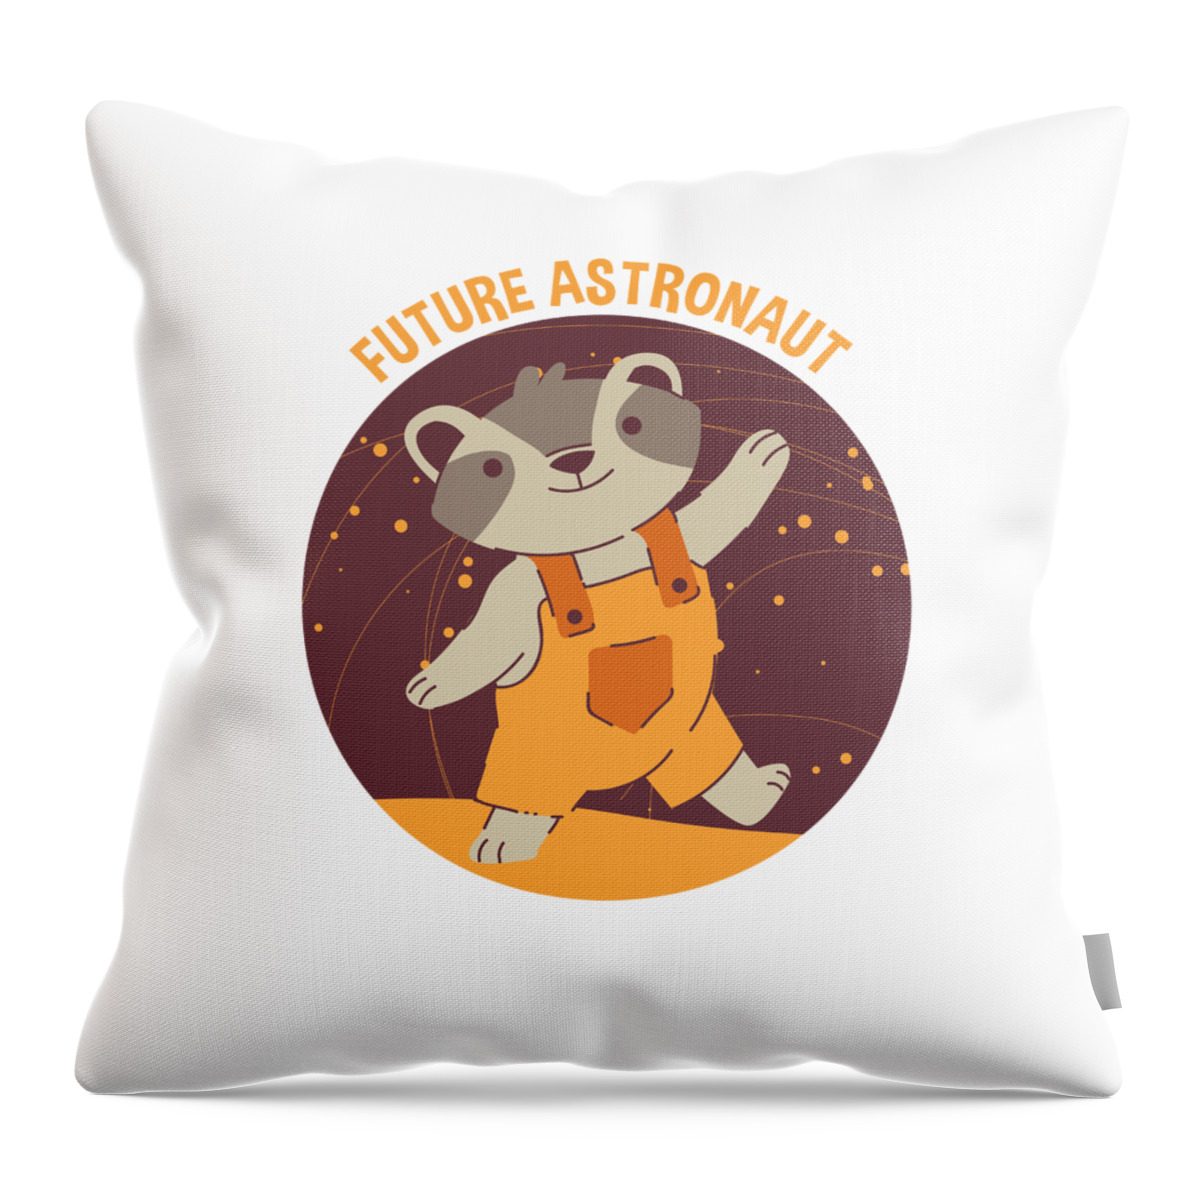 Adorable Throw Pillow featuring the digital art Future Astronaut Raccoon by Jacob Zelazny